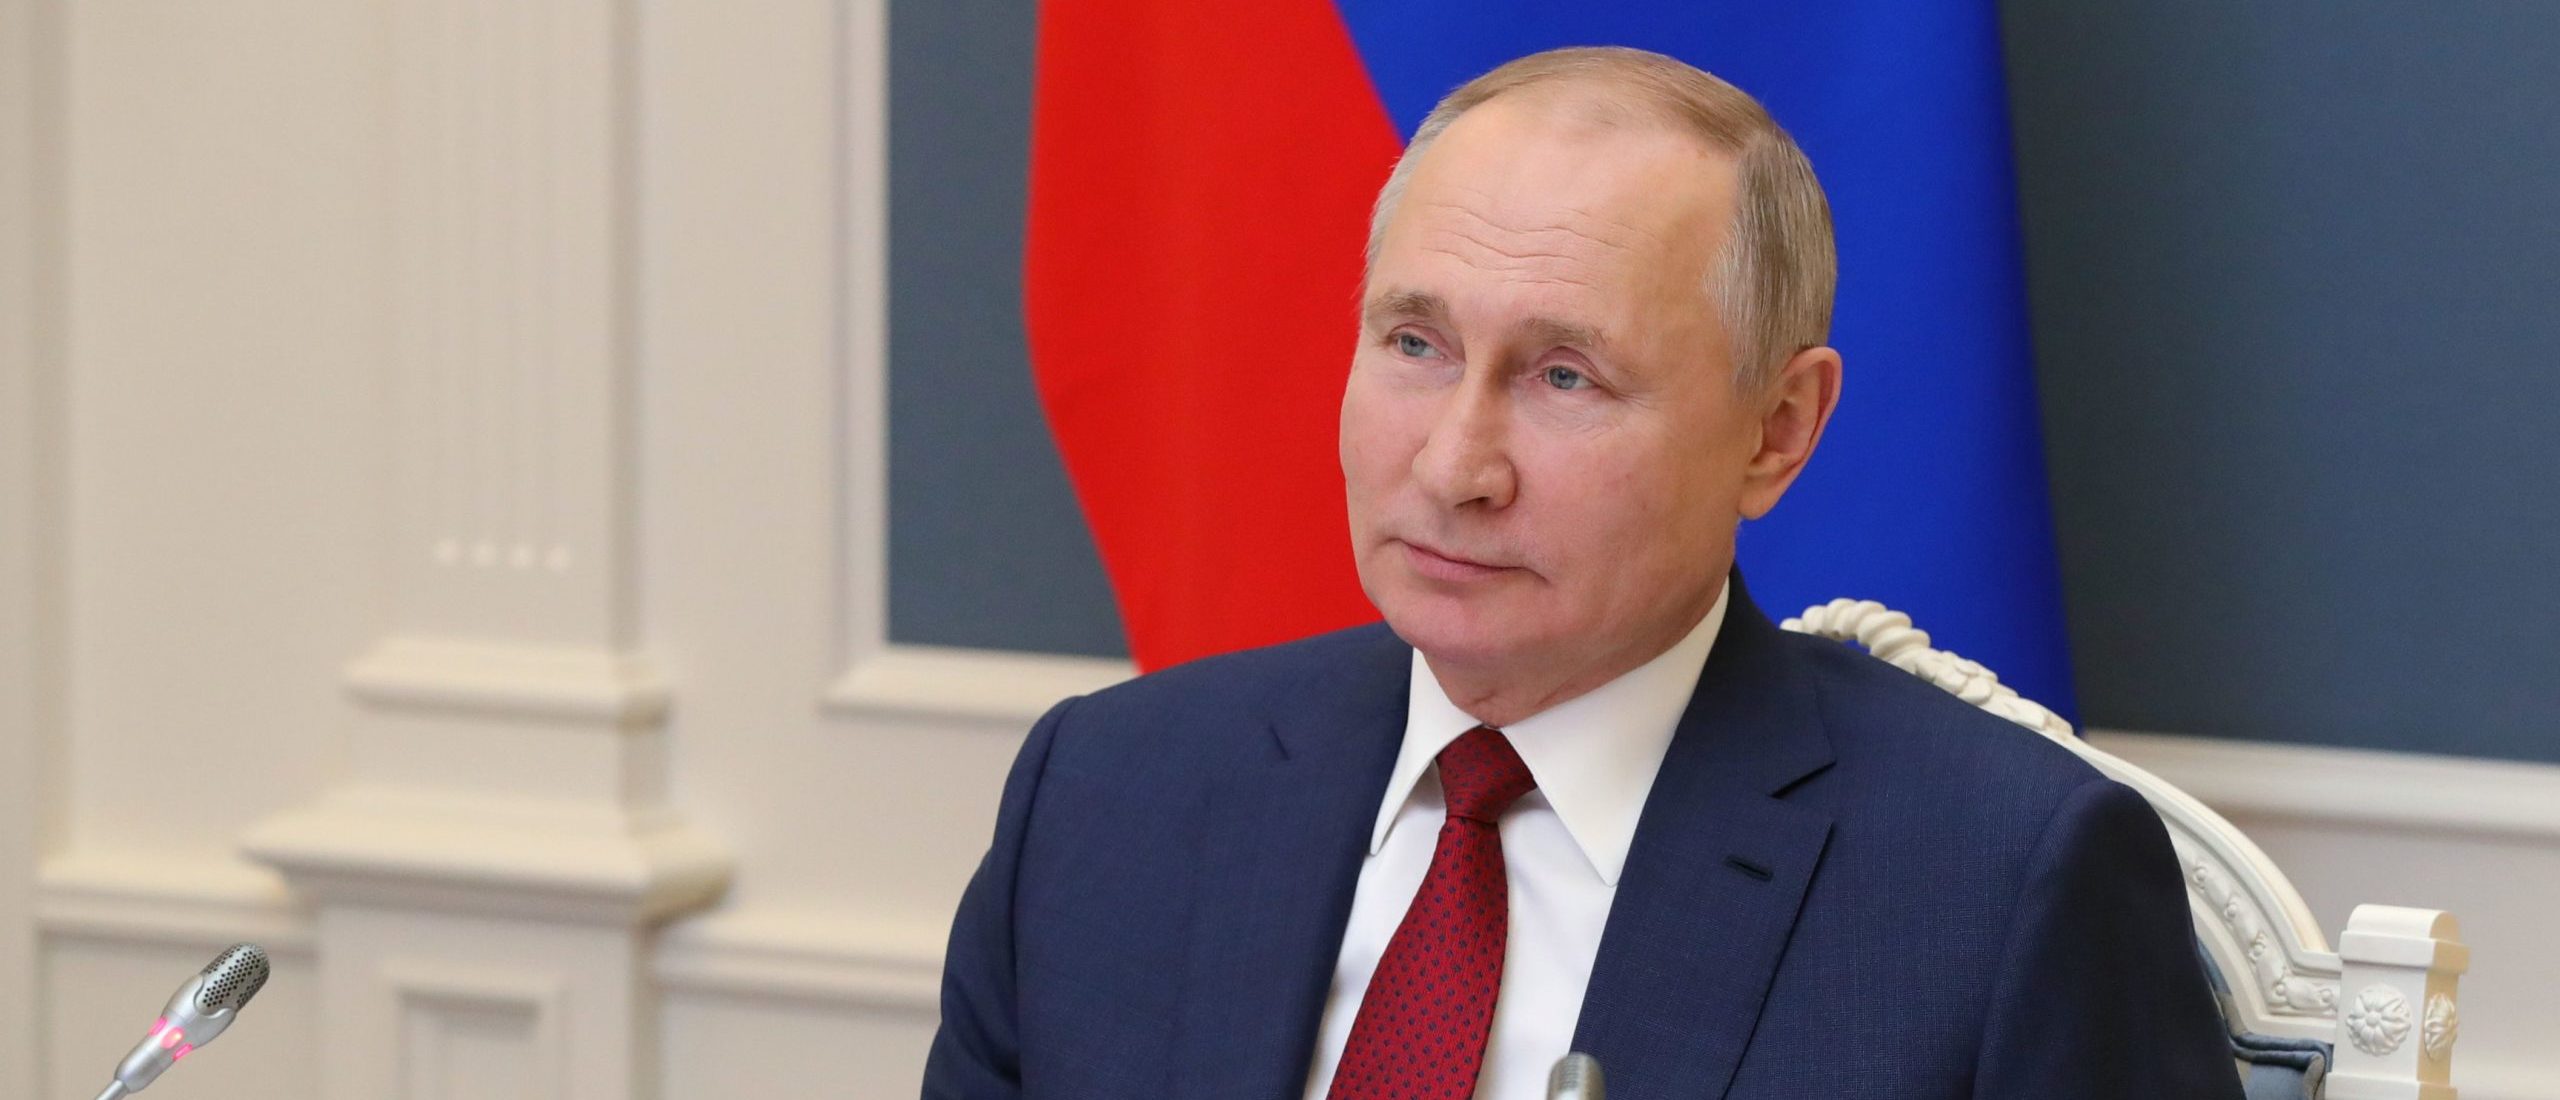 Russian President Vladimir Putin addresses the virtual World Economic Forum via a video link from Moscow on Wednesday. (Mikhail Klimentyev/Sputnik/AFP via Getty Images)